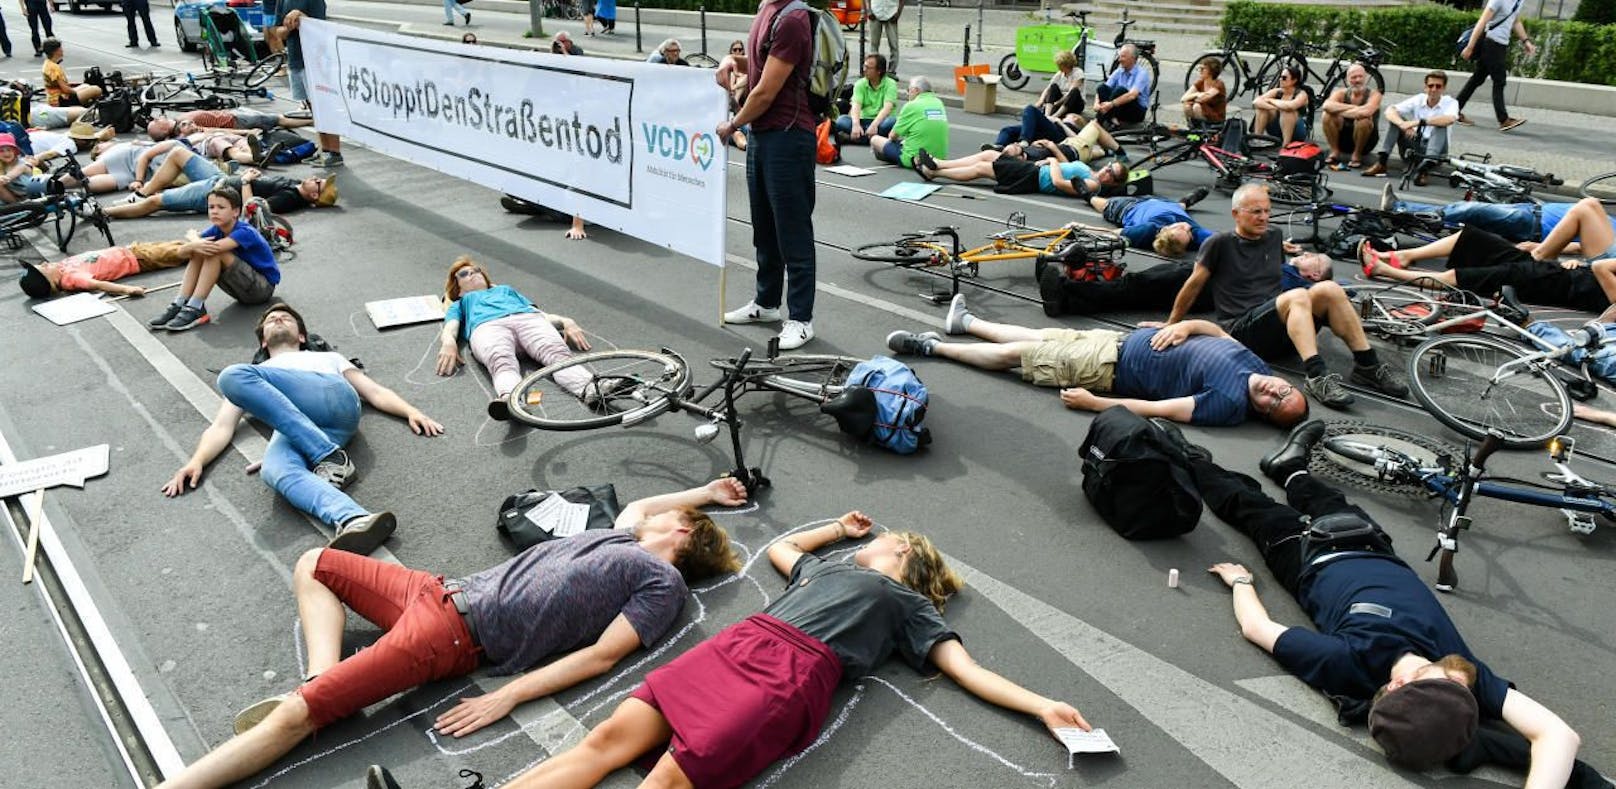 Protest gegen Verkehrstote in Berlin. Symbolbild.